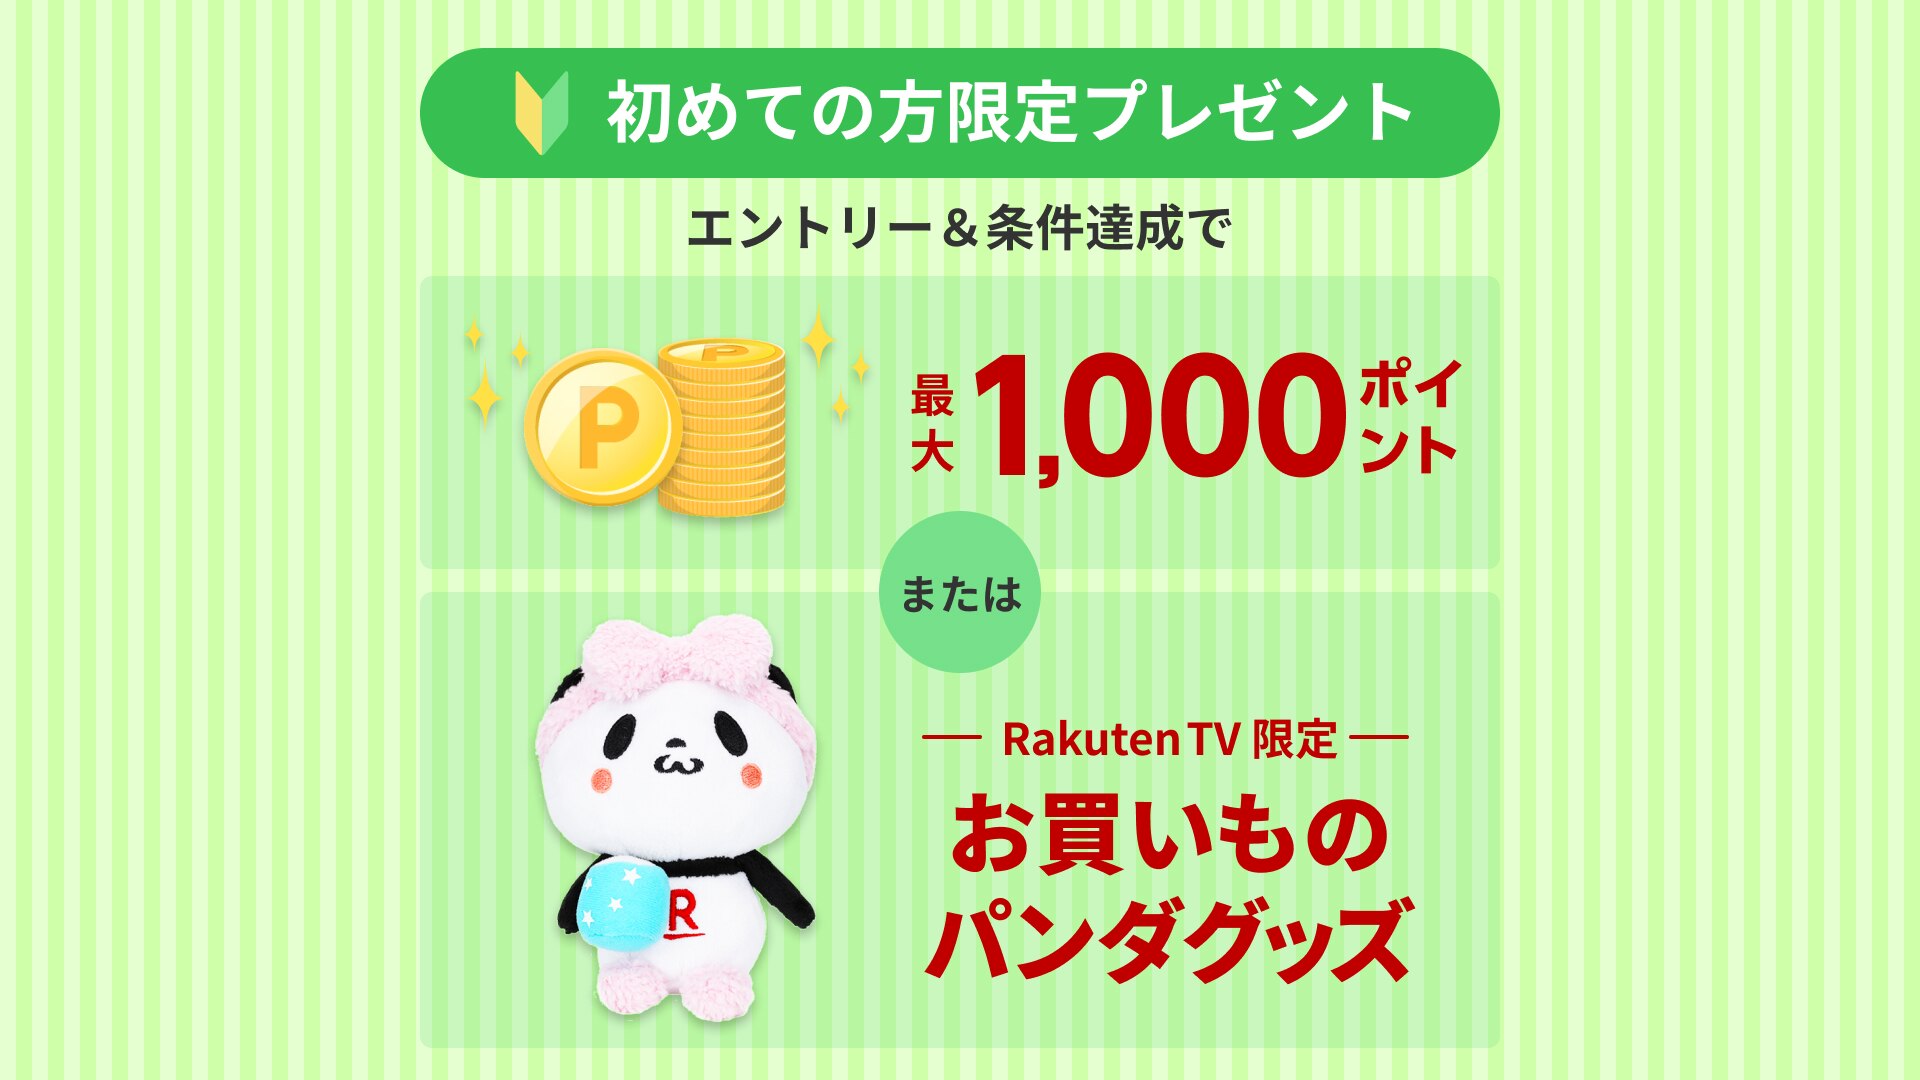 Rakuten TV初めての方限定！最大1,000ポイントもらえる、3つの特典ご案内 | 楽天TV